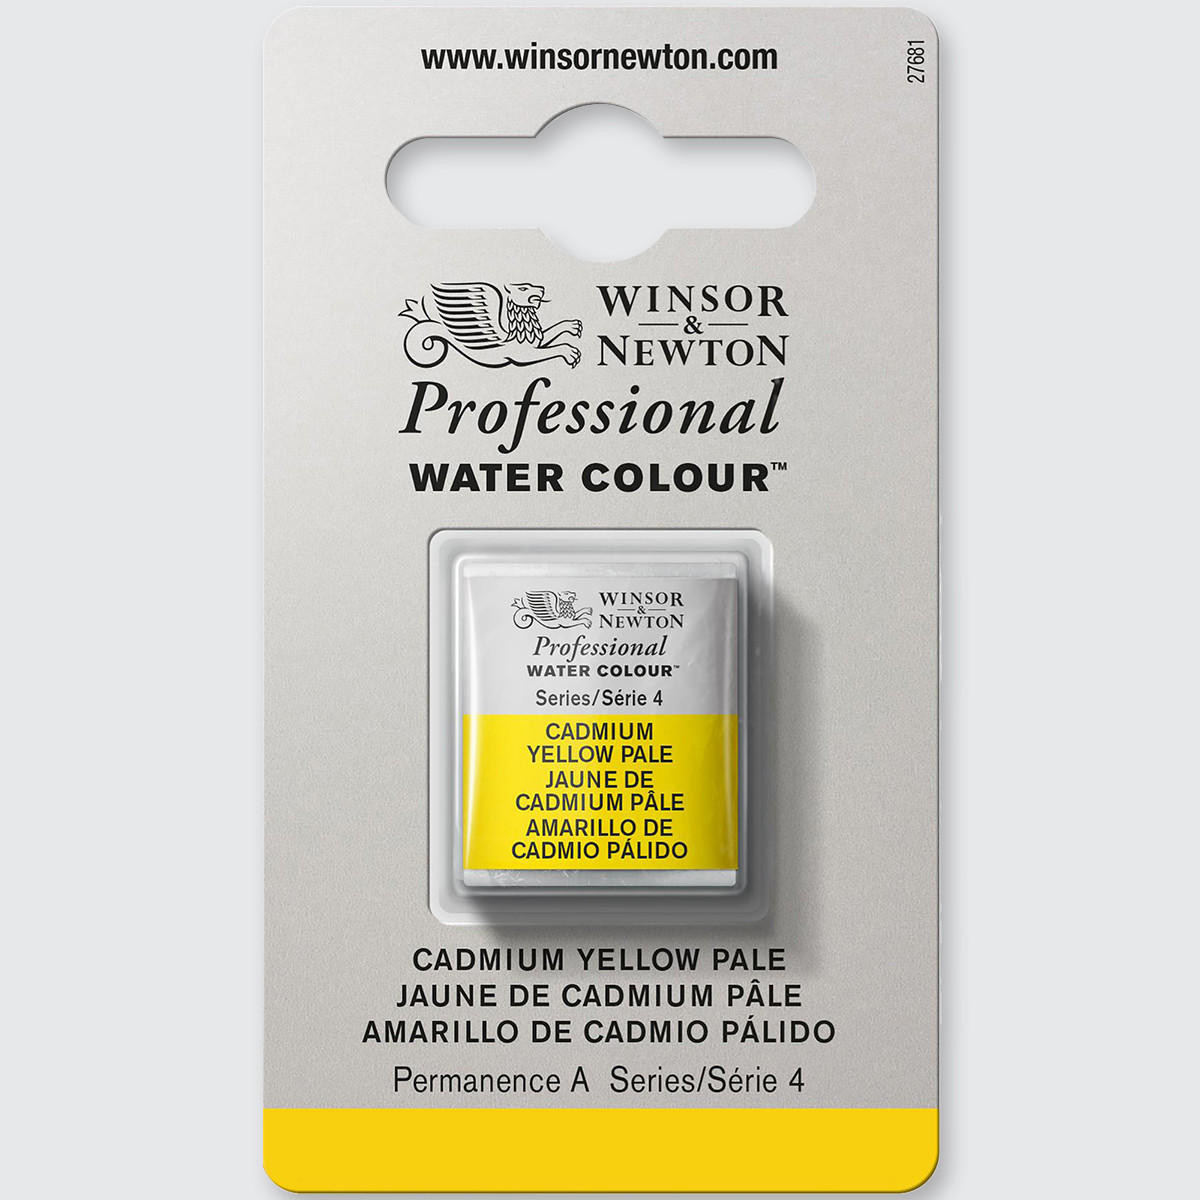 Winsor & Newton Professional Water Colour Half Pan Cadmium Yellow Pale